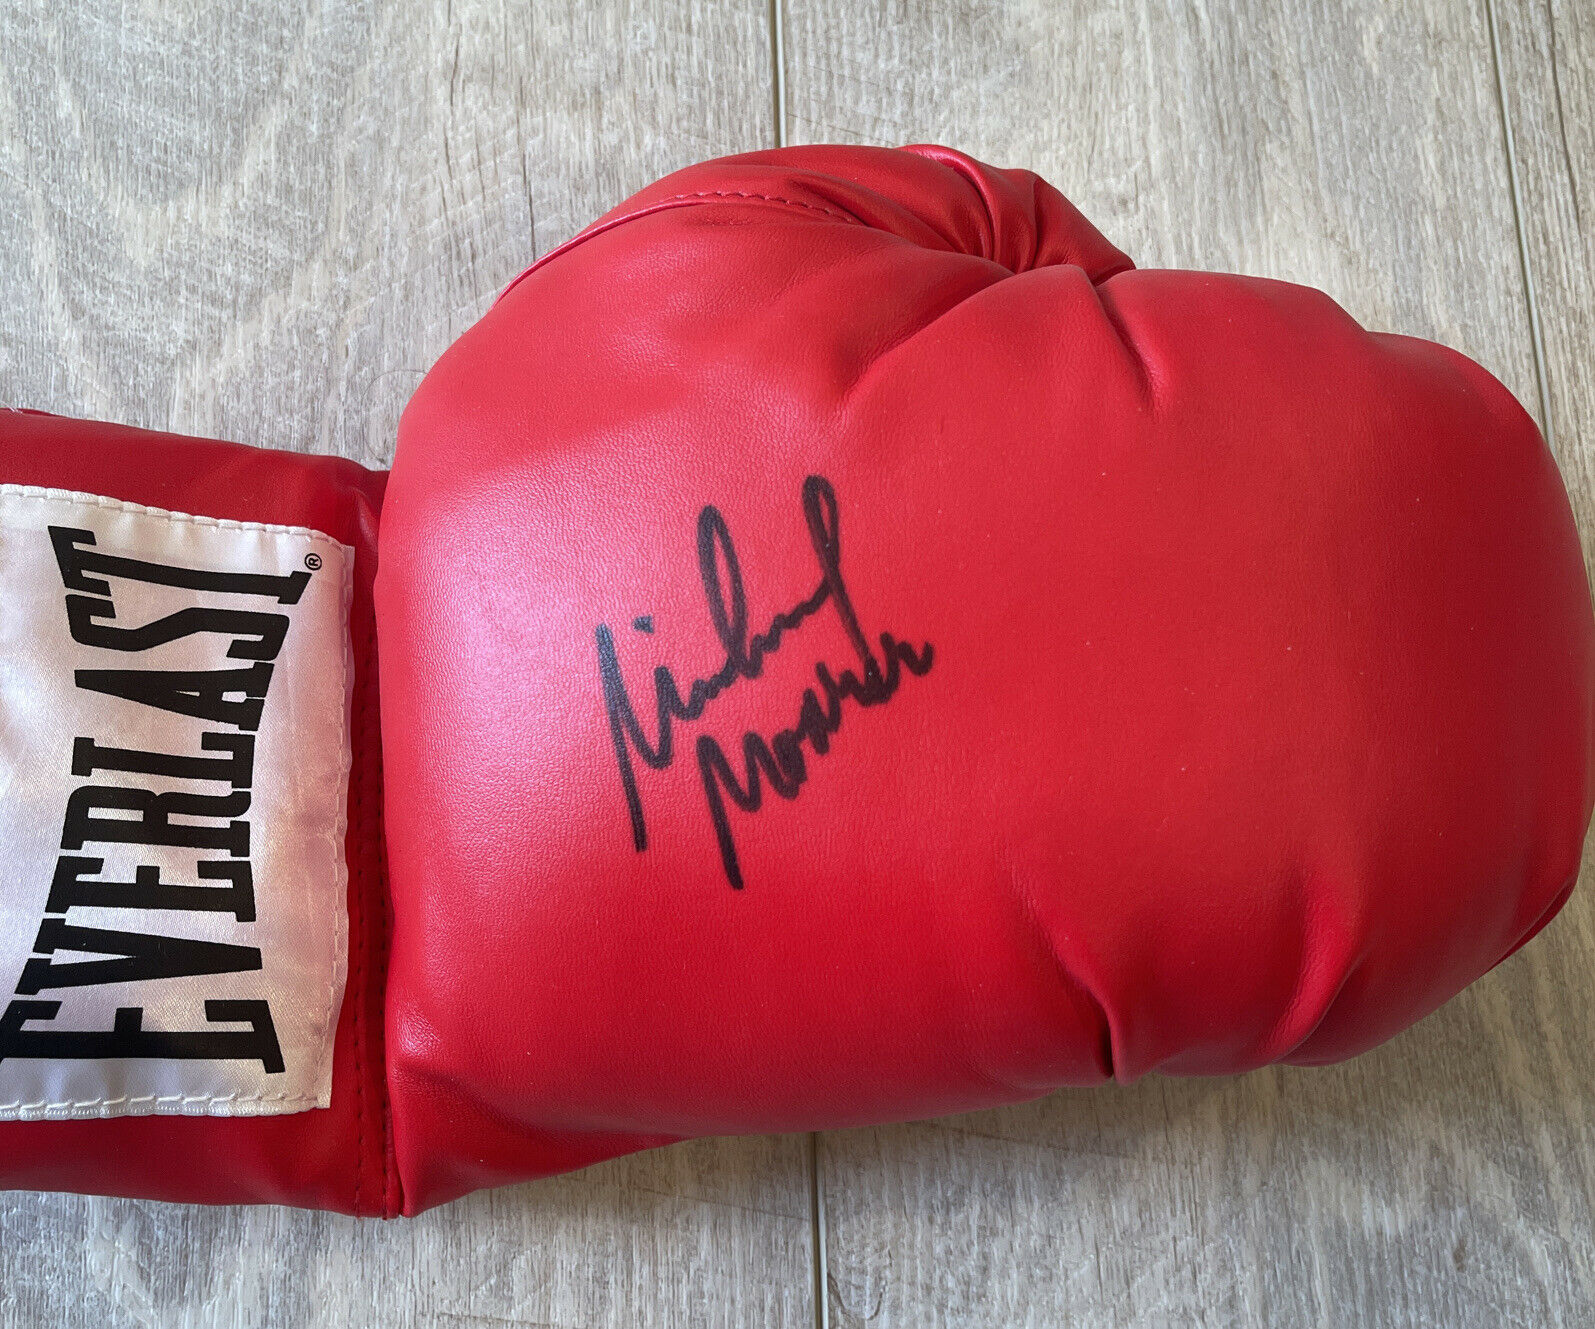 Michael Moorer - Autographed Everlast Boxing Glove - Authentic